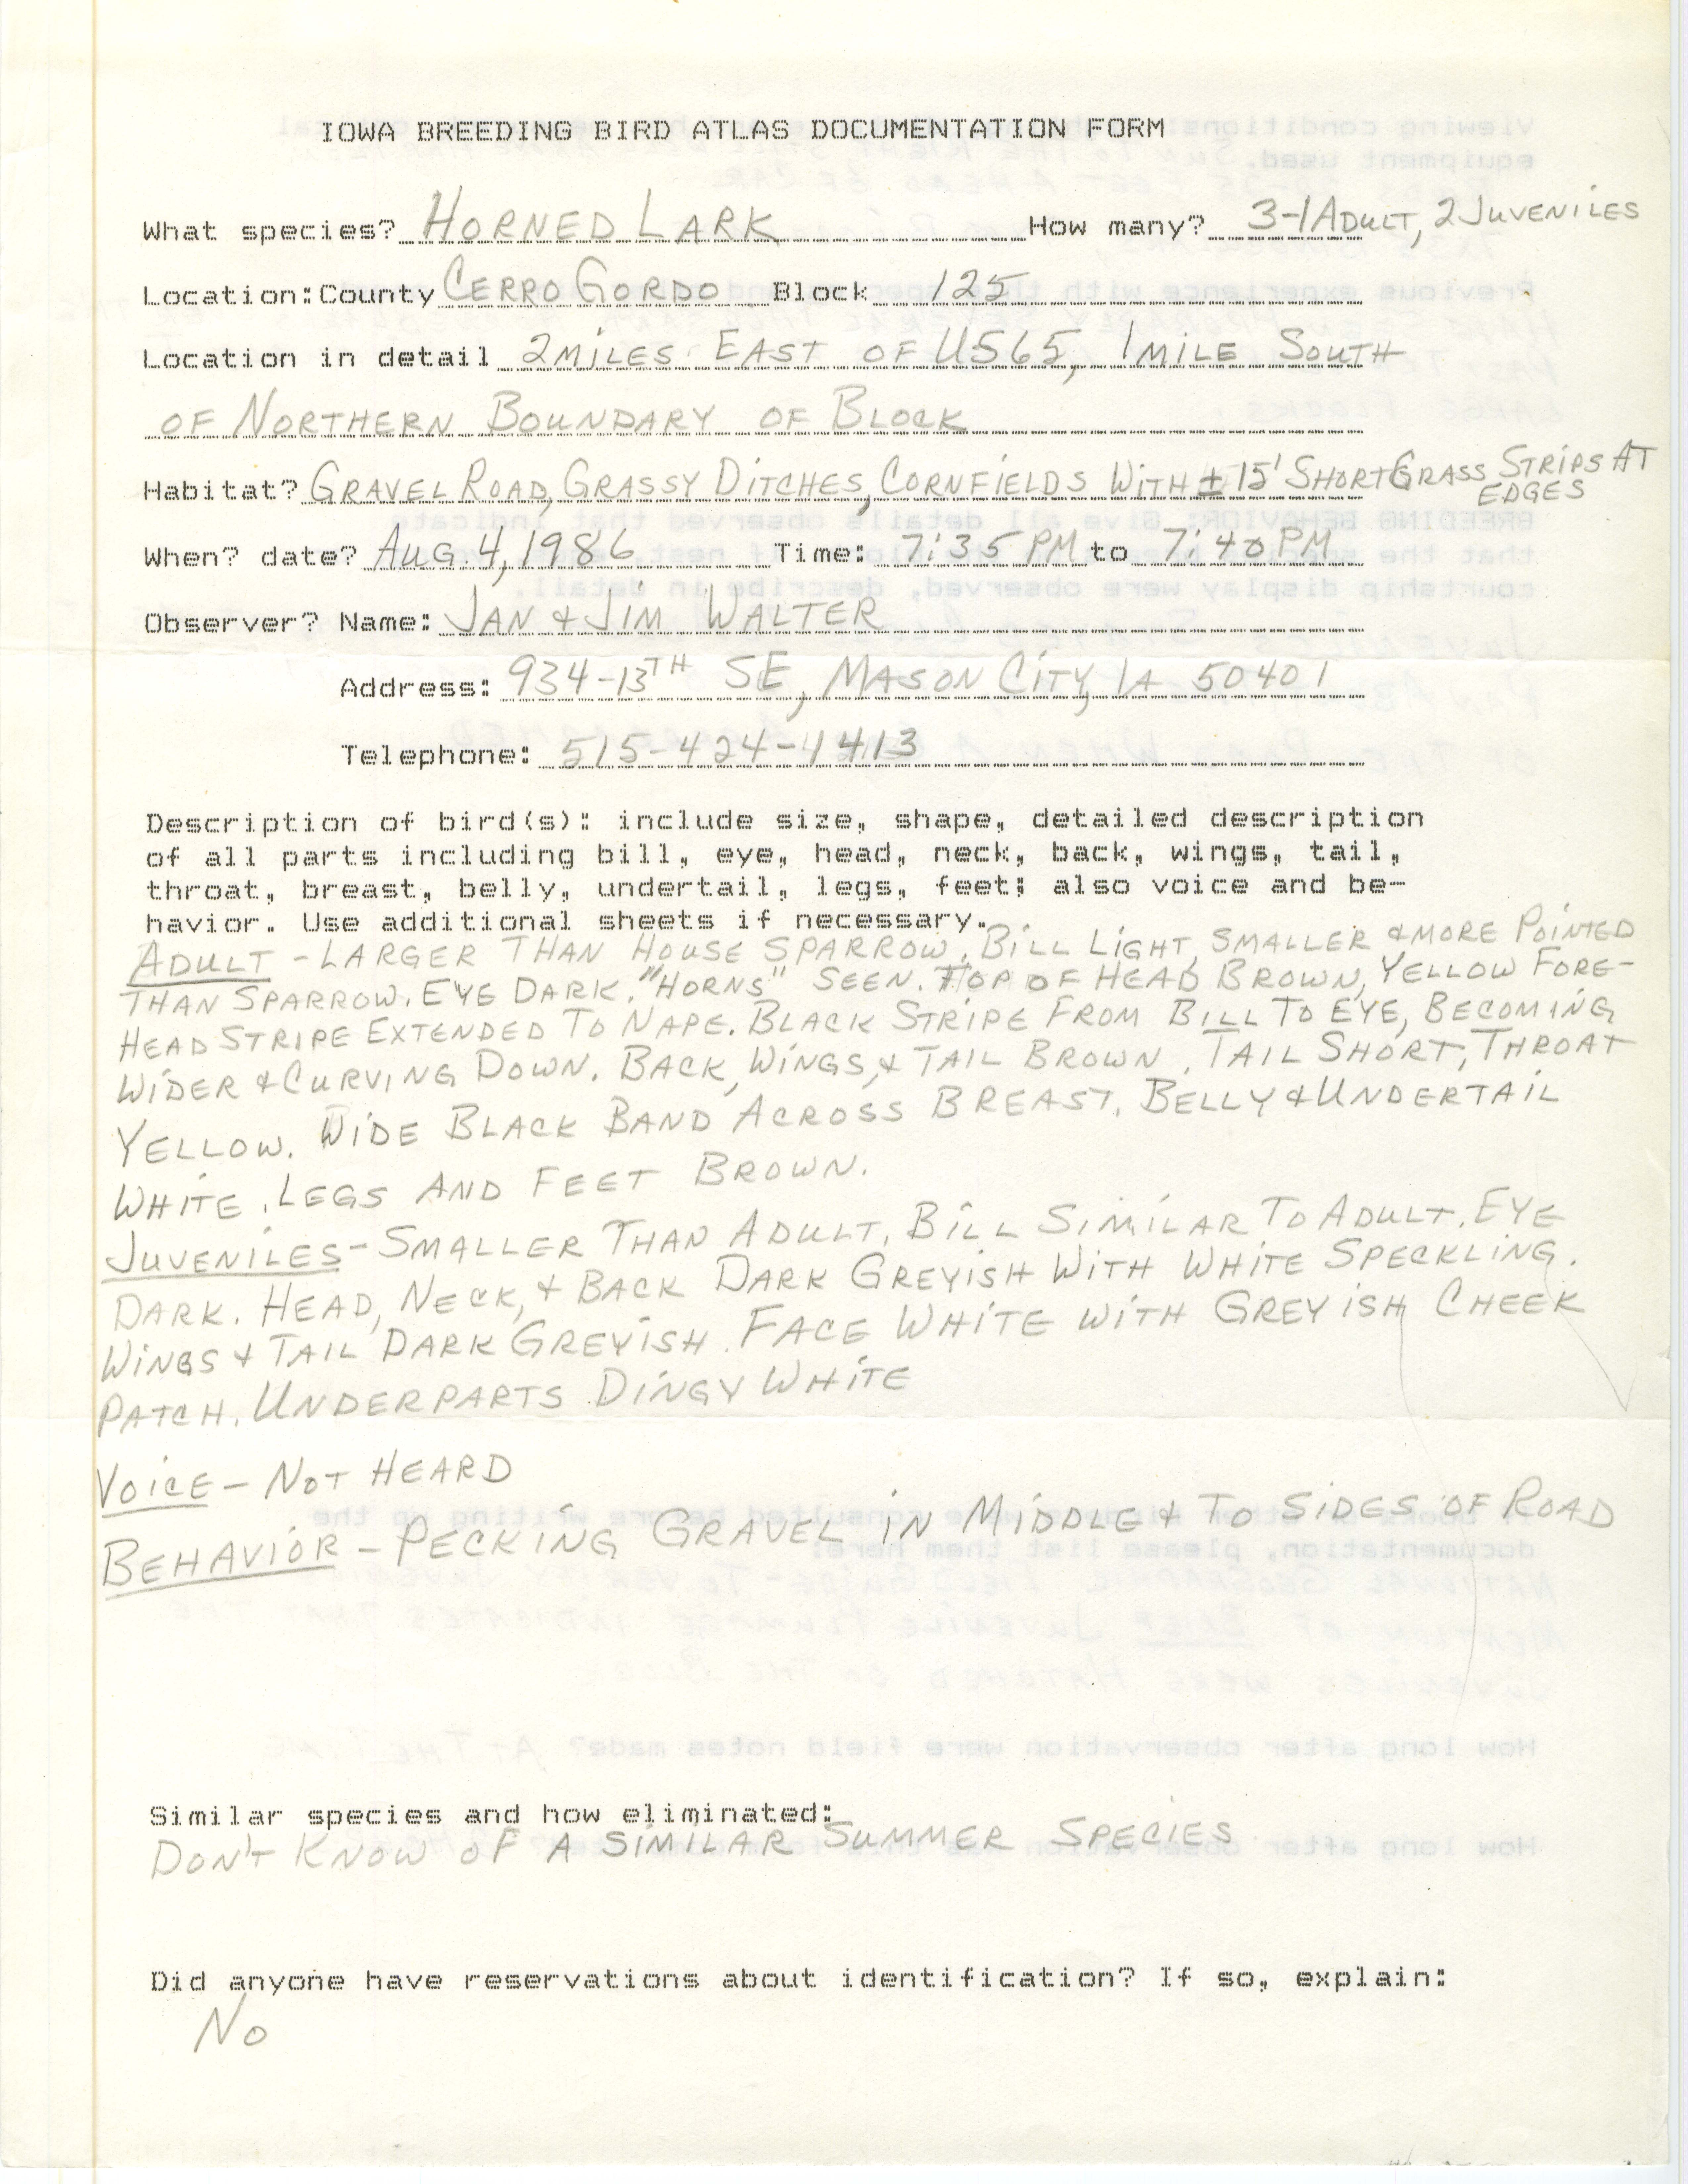 Iowa Breeding Bird Atlas documentation form, Jan L. Walter and Jim B. Walter, August 4, 1986